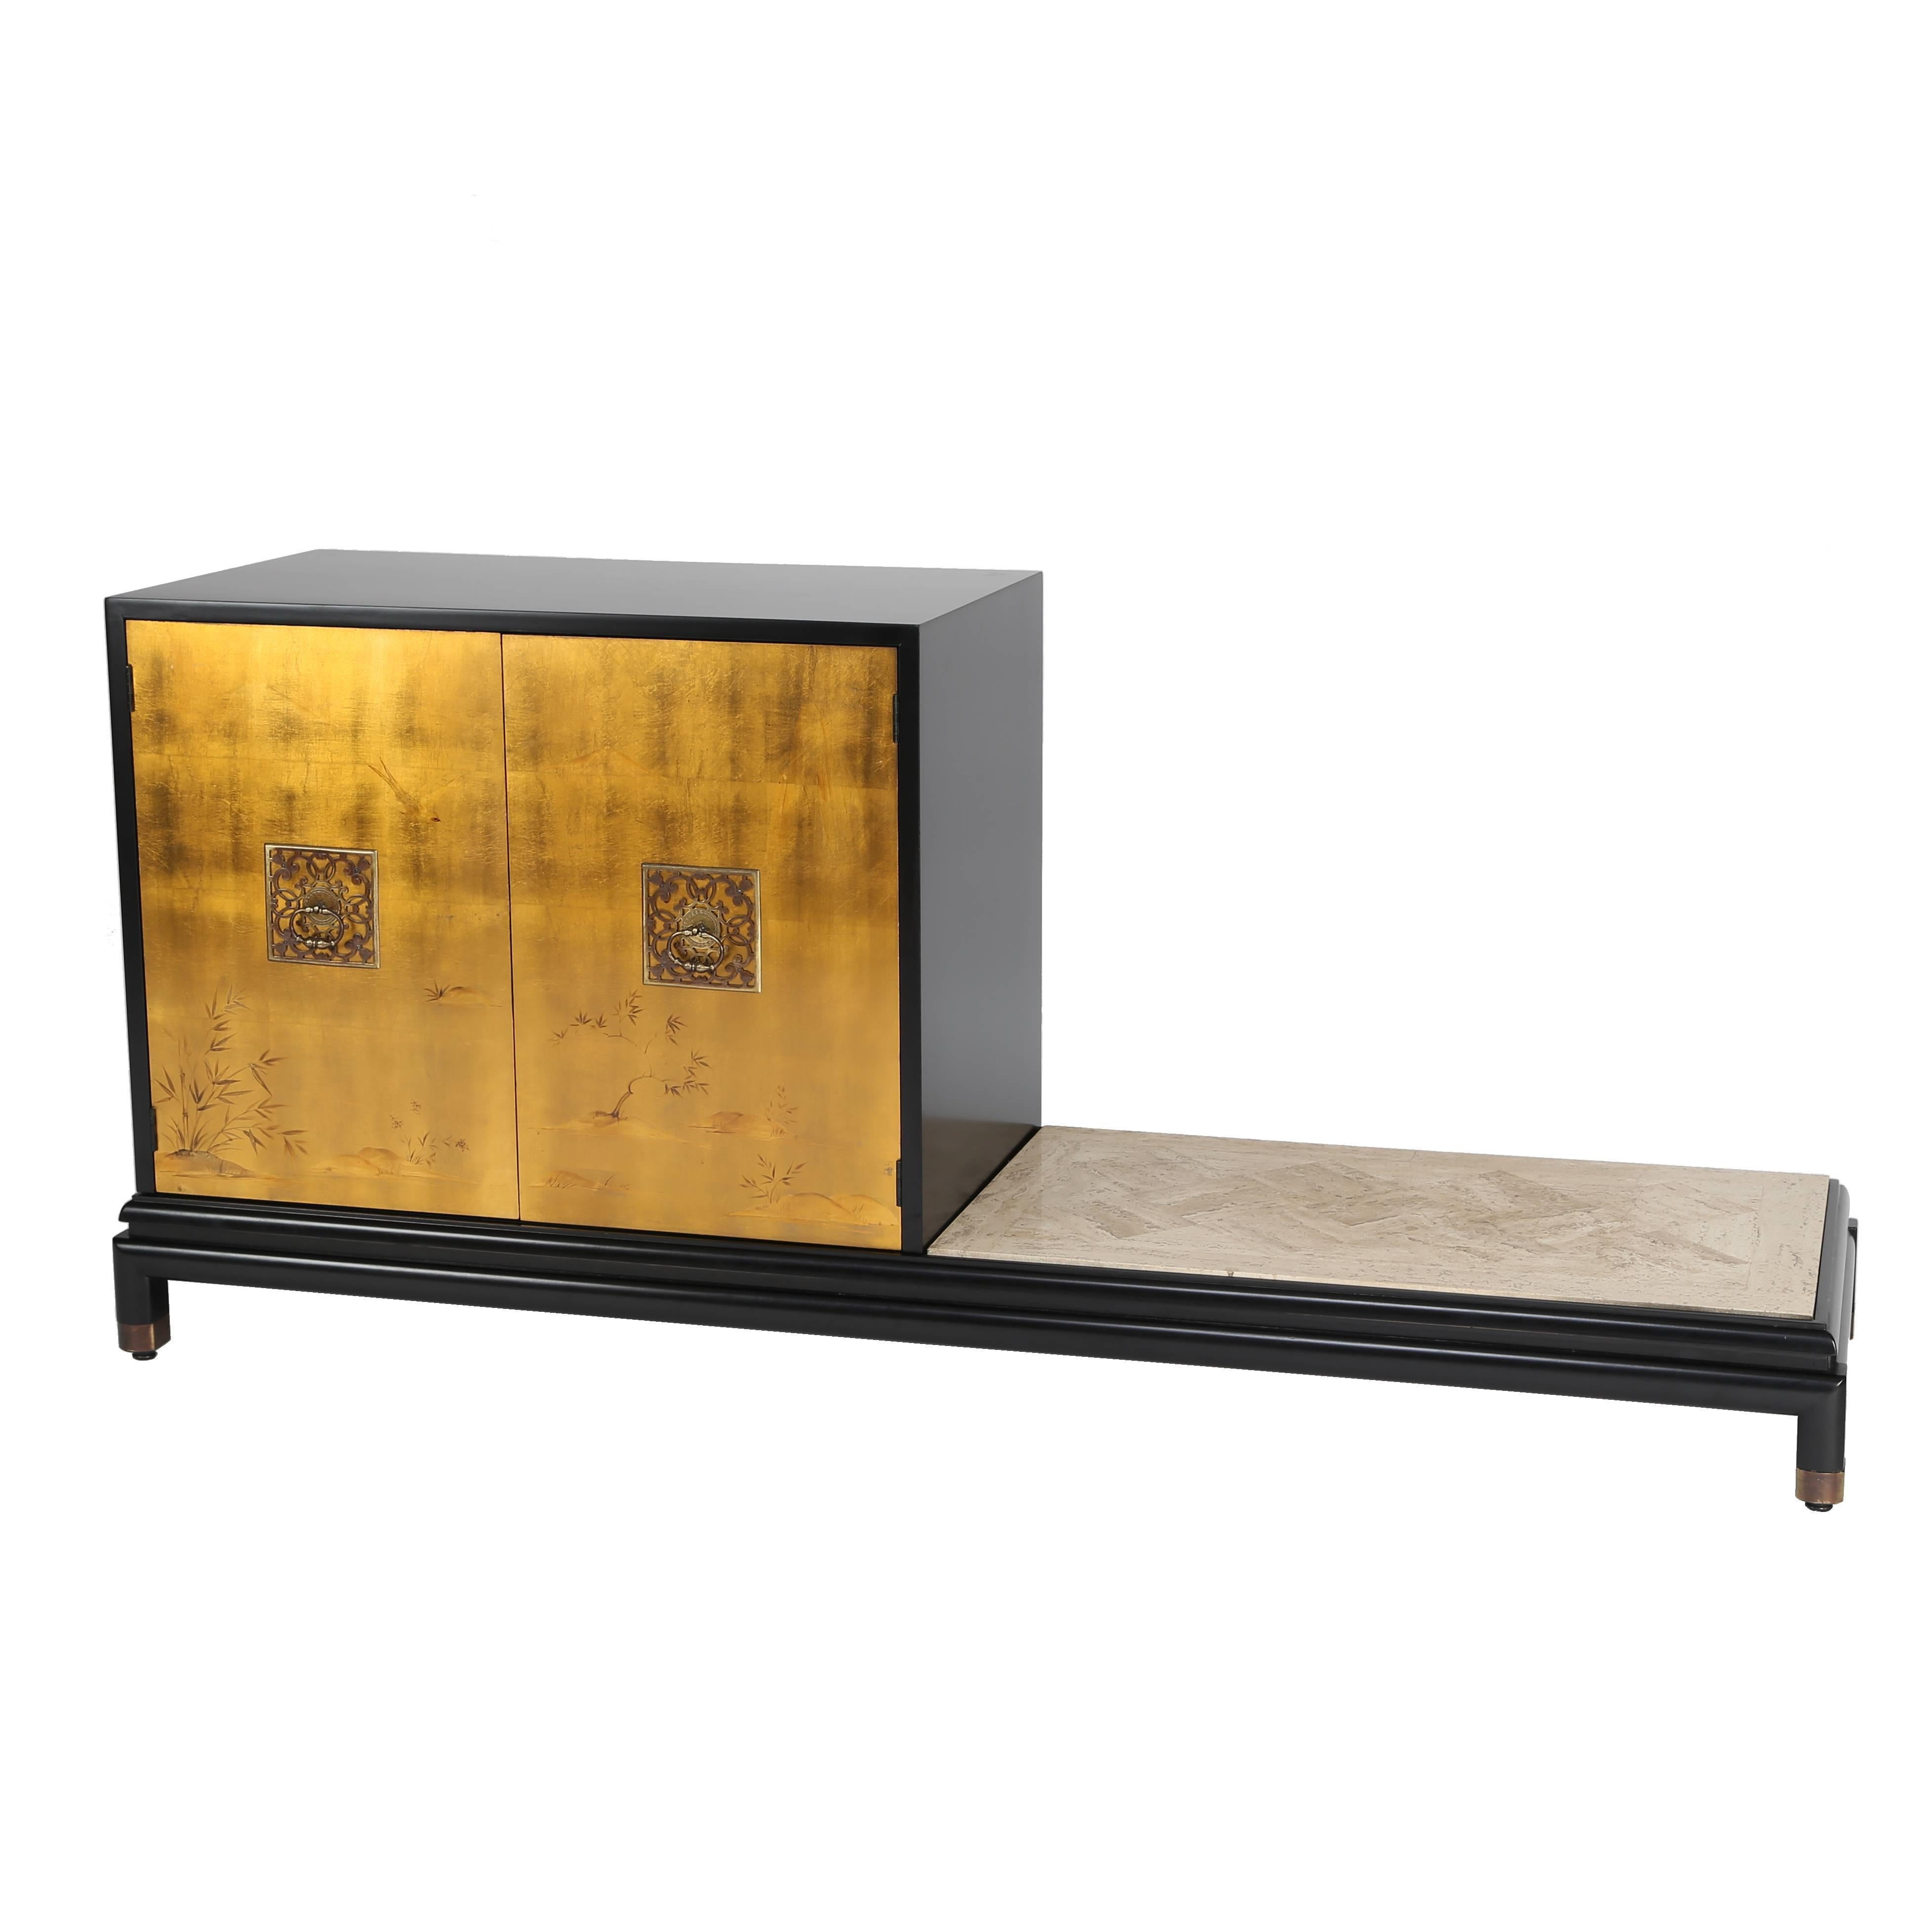 Renzo Rutili Cabinet with Bench in Gilt, Black Lacquer & Travertine, Circa 1960s For Sale